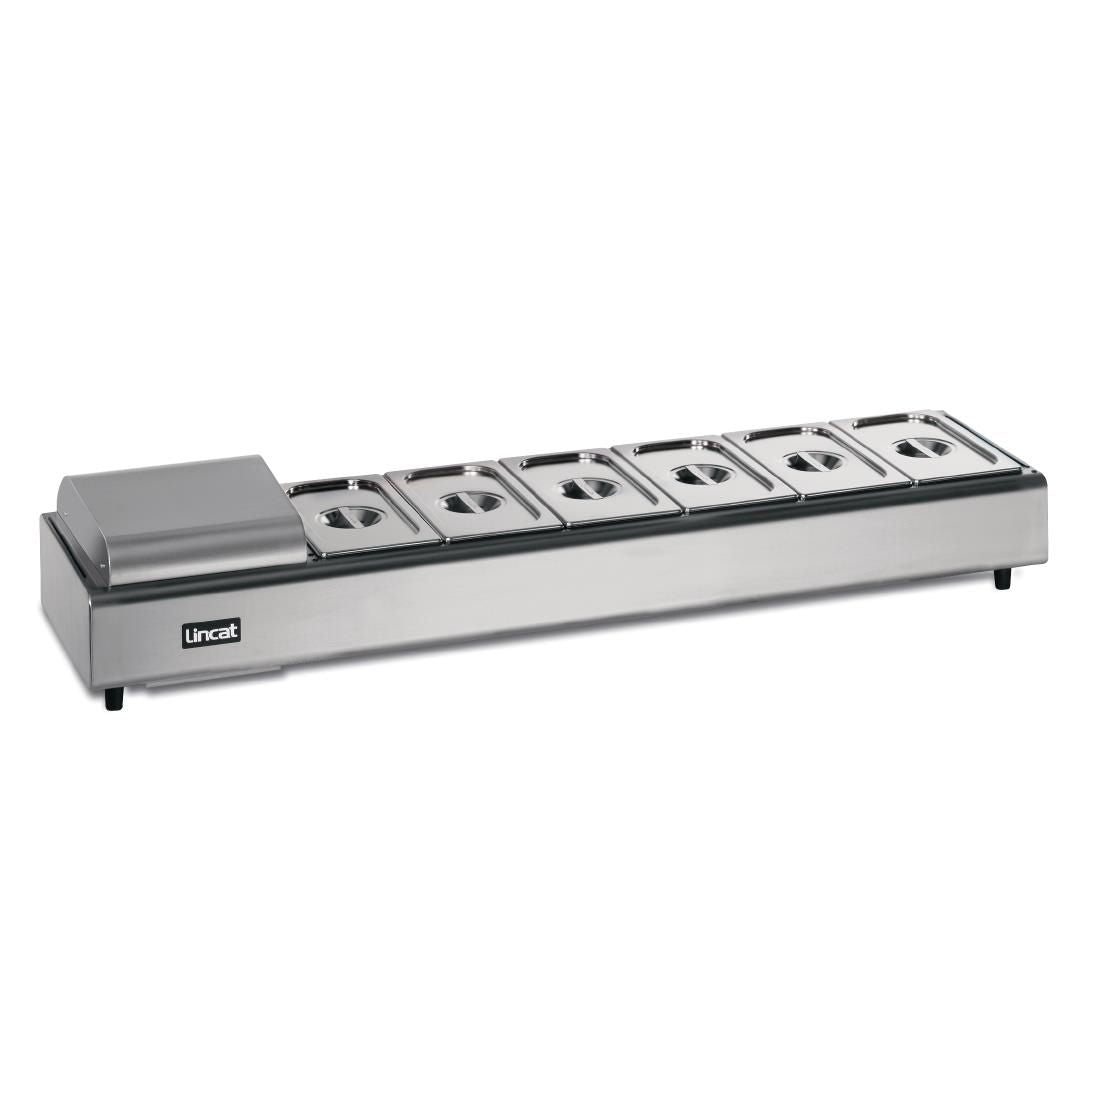 FDB6 - Lincat Seal Counter-top Food Display Bar - Refrigerated - W 1399 mm - 0.175 kW JD Catering Equipment Solutions Ltd